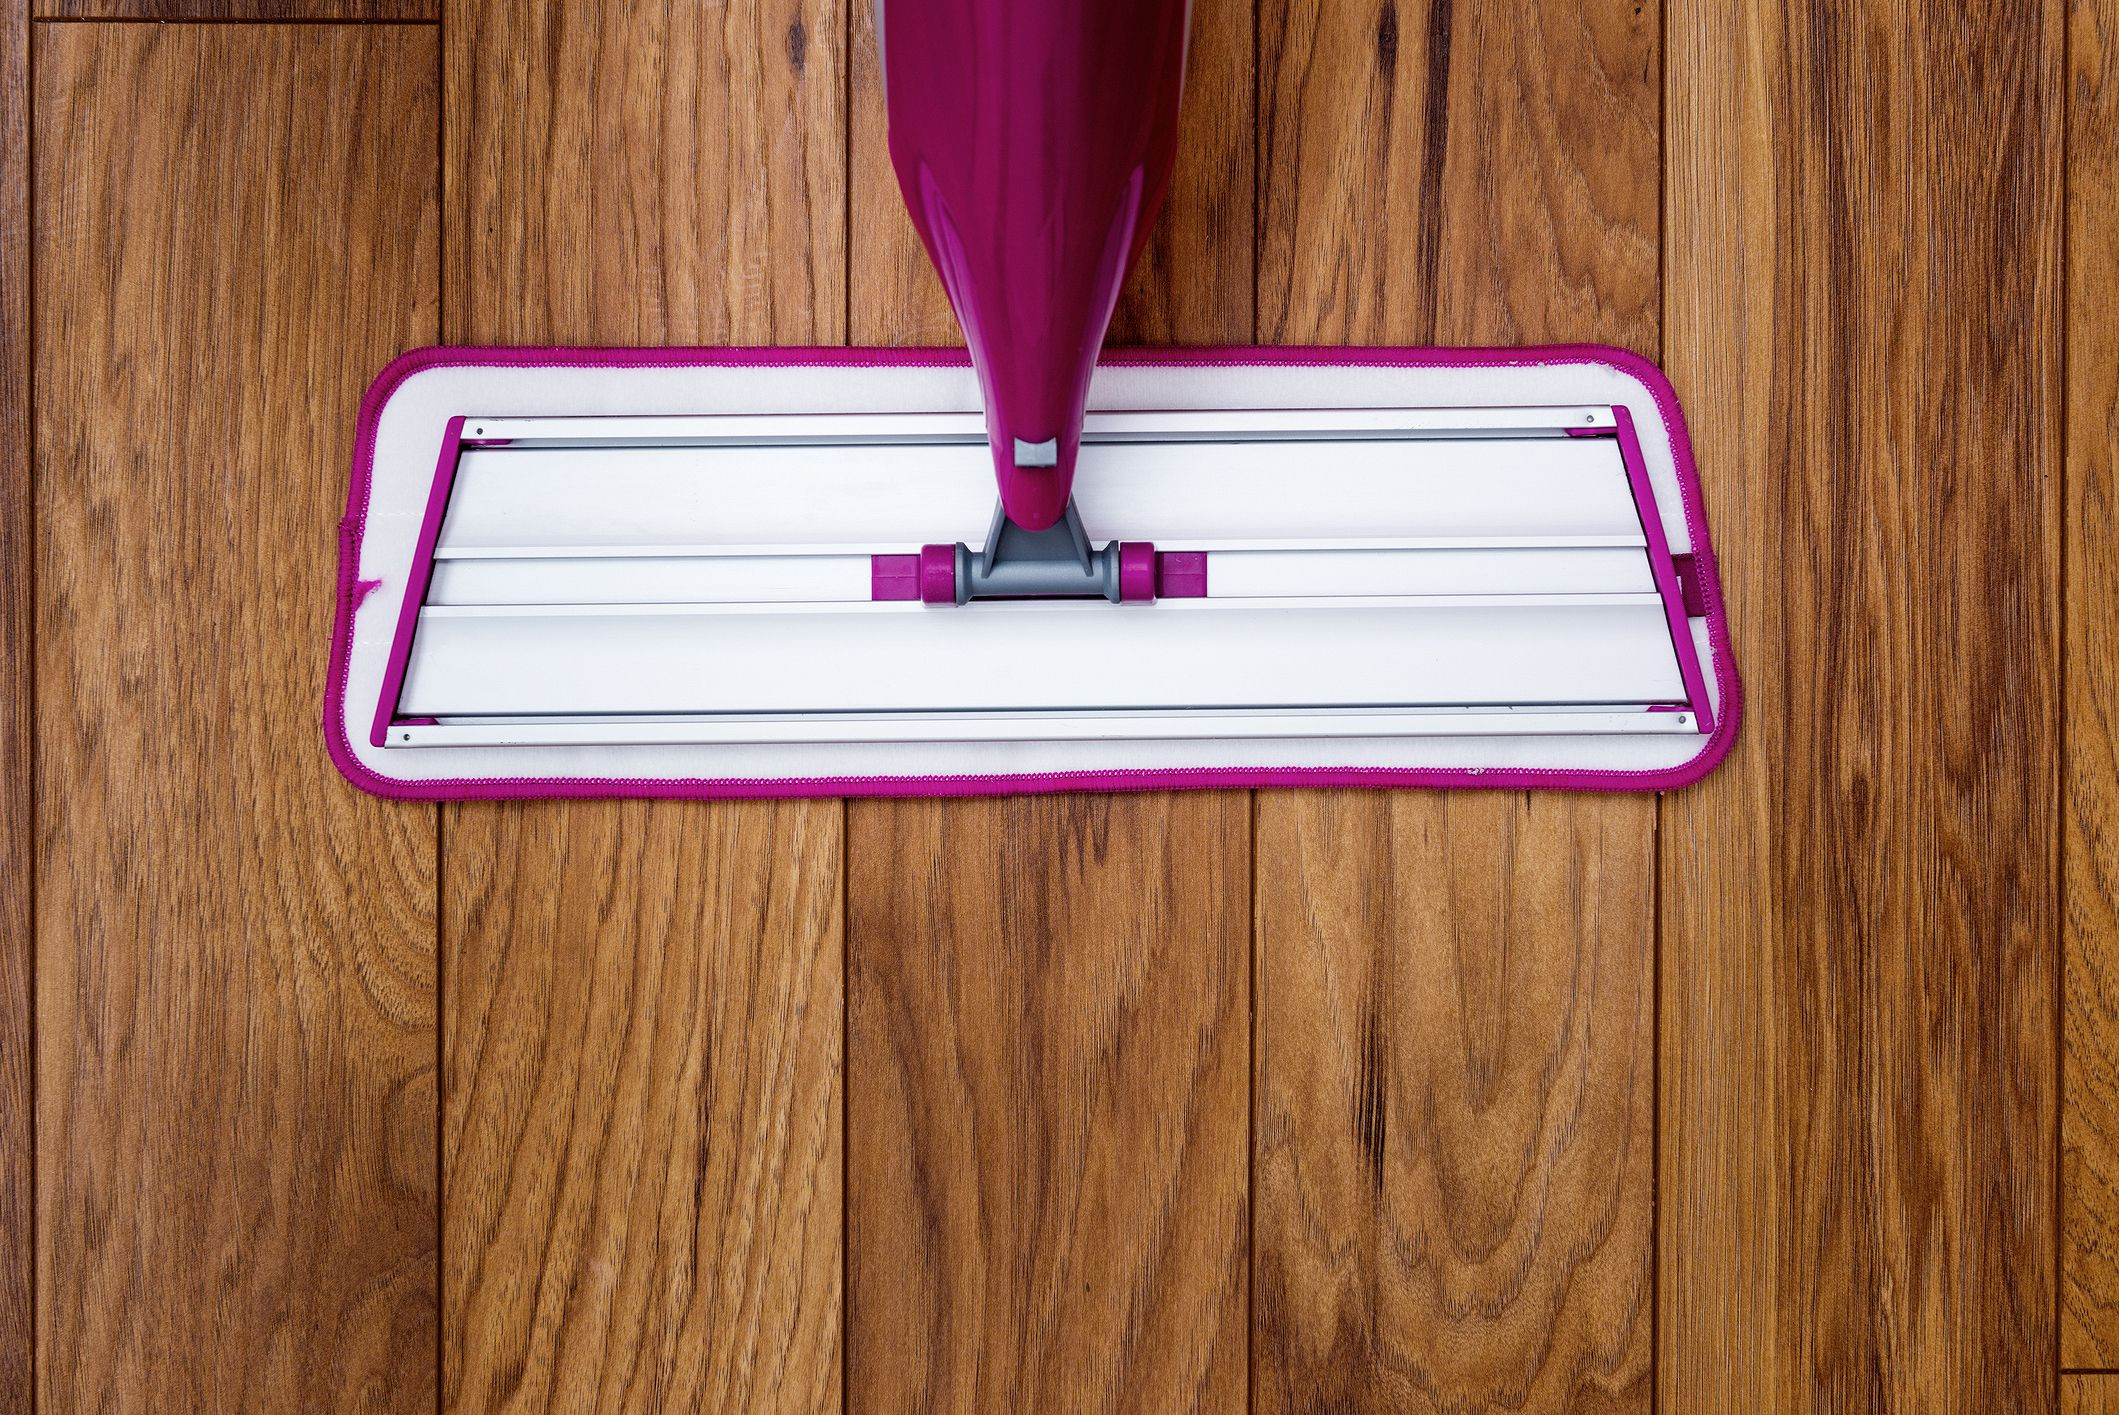 Hardwood Flooring Knee Pads Of the Best Way to Clean Laminate Floors Inside Mop Gettyimages 510300933 586f0aa15f9b584db33595ee